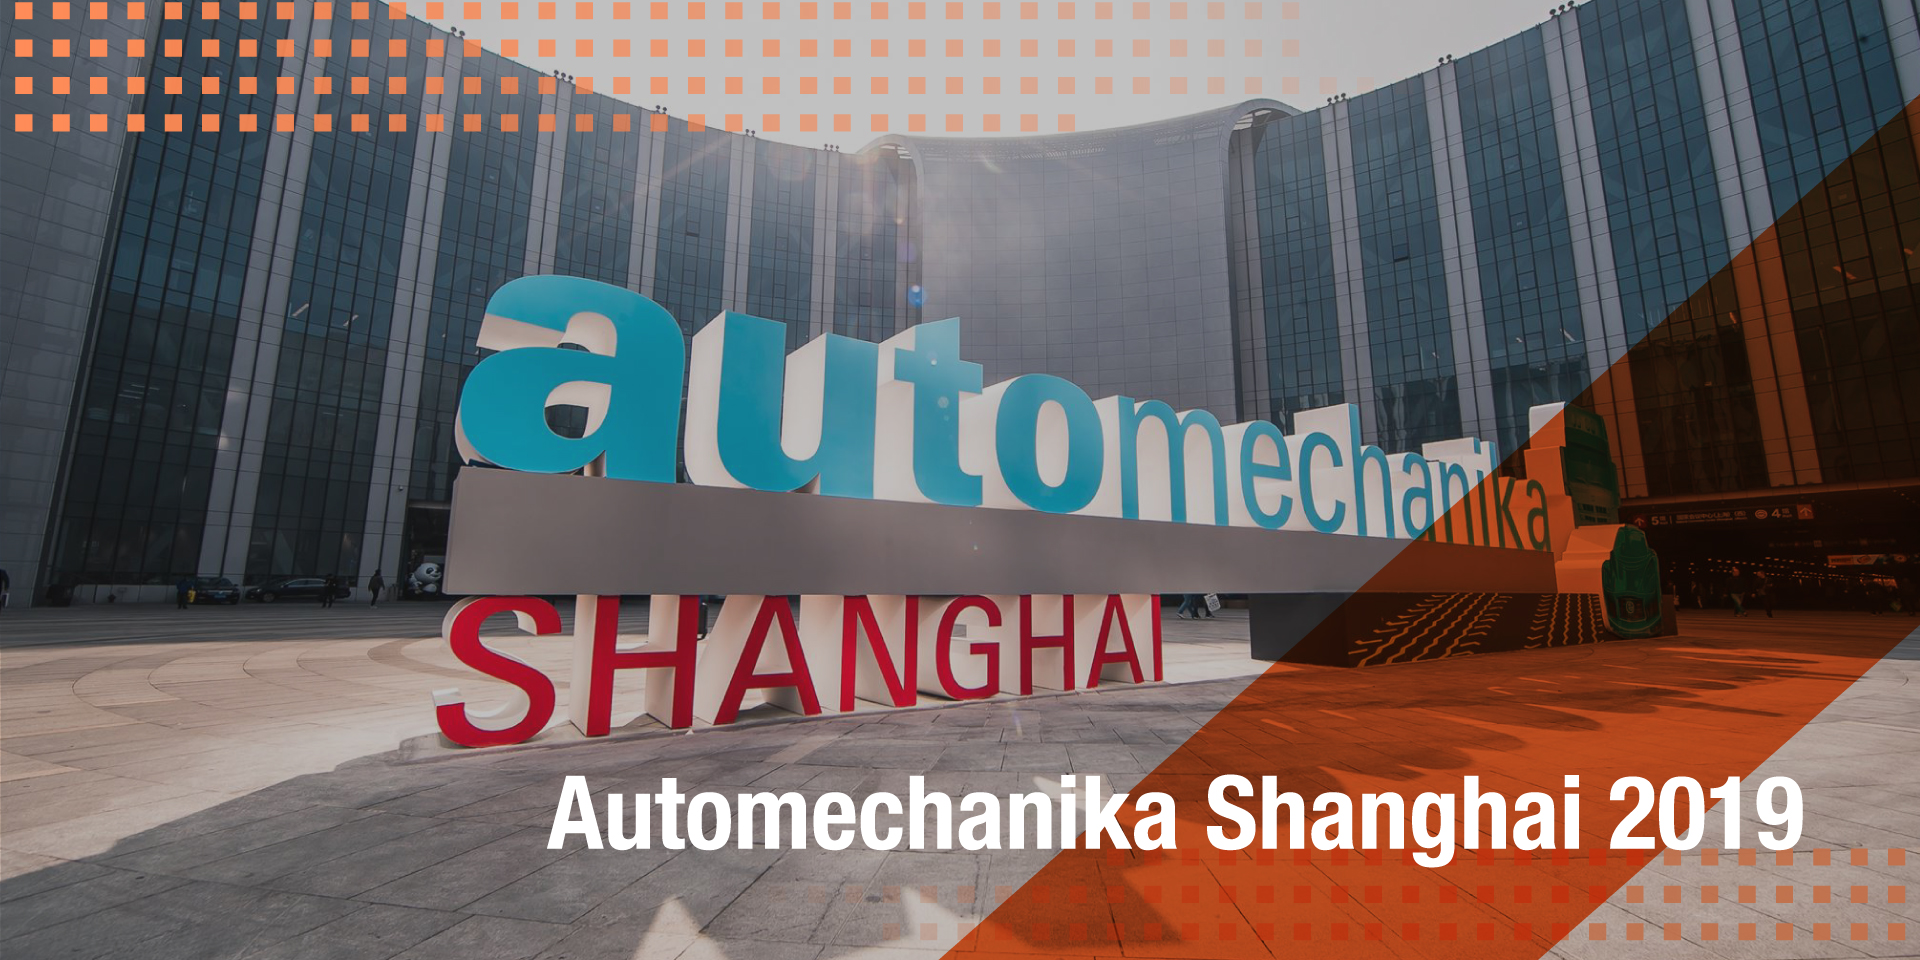 Automechanika Shanghai 2019